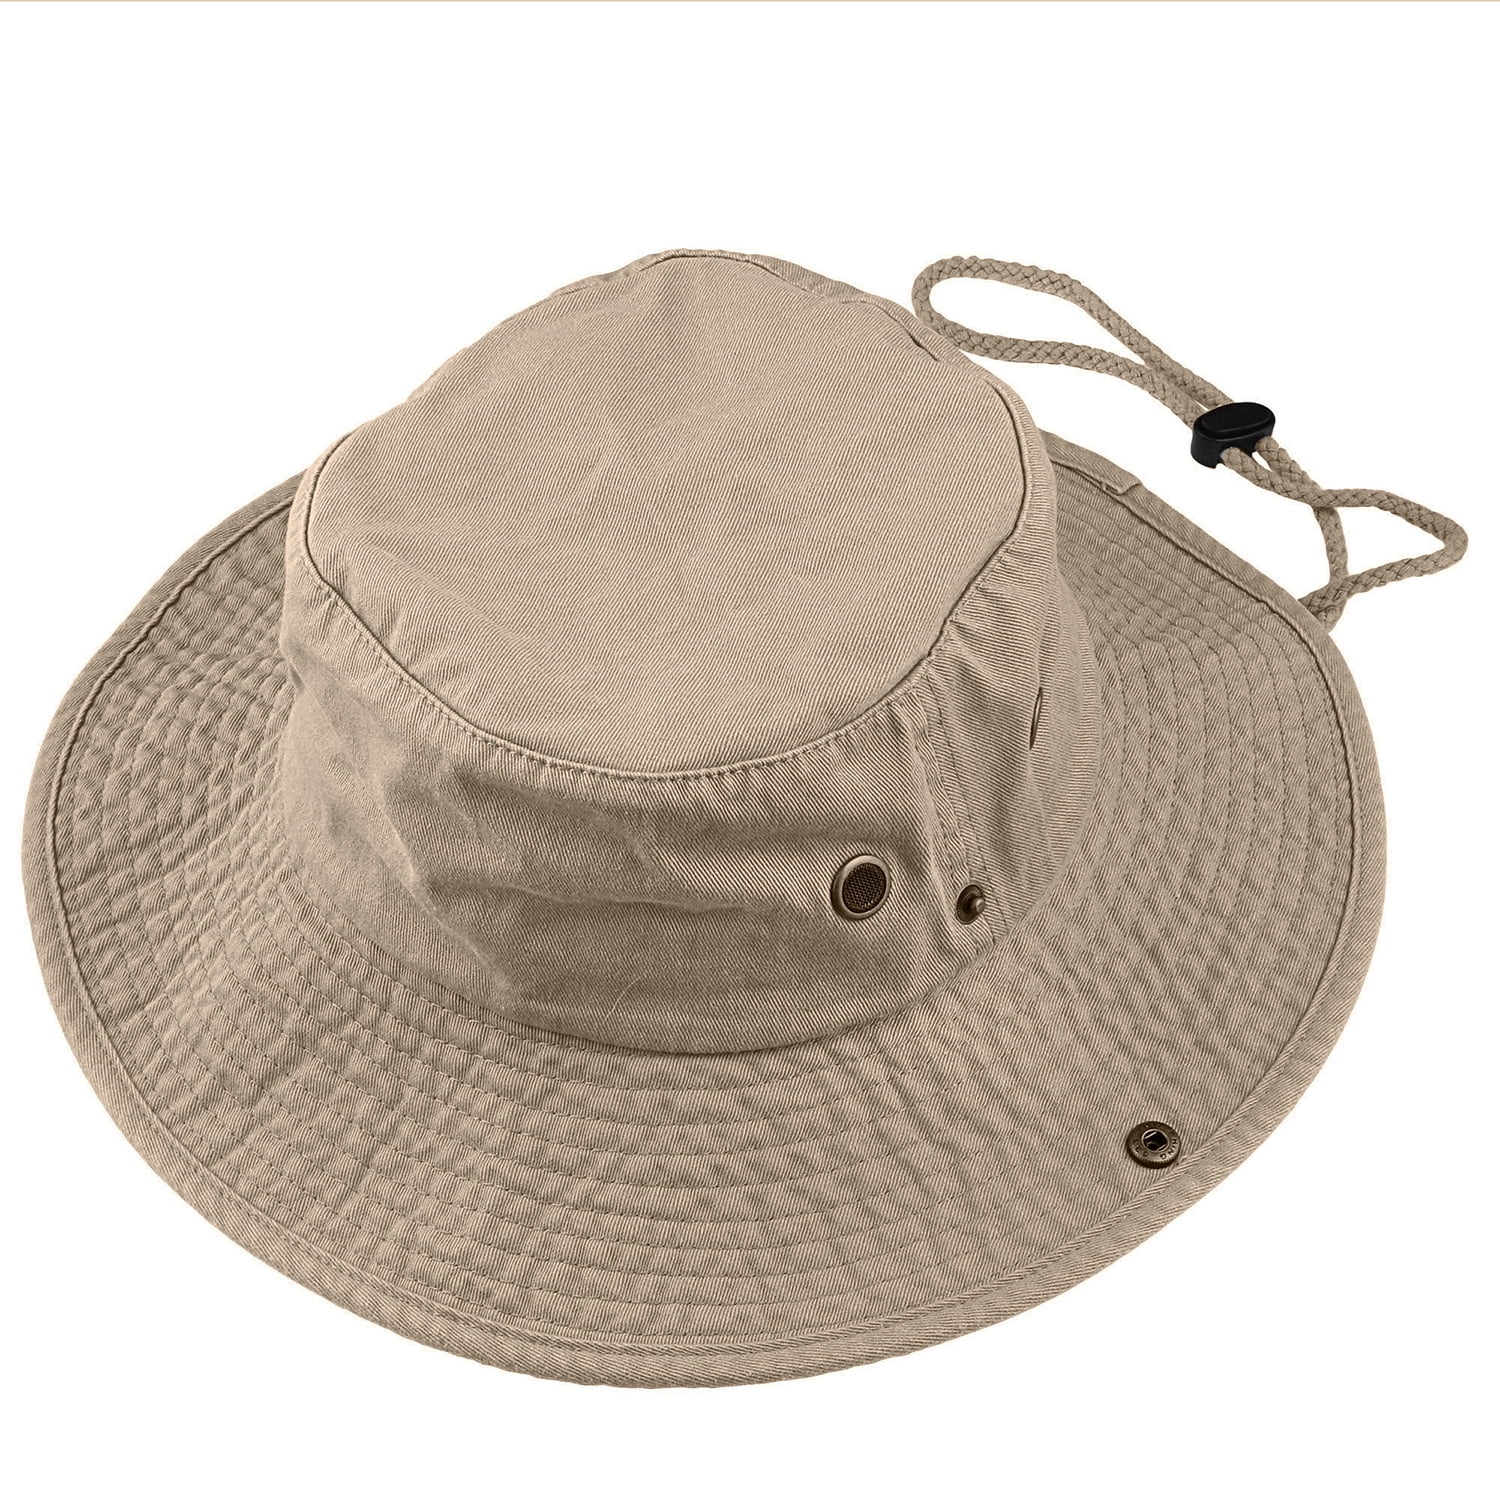 Zooron Sun Hats for Men Women, Wide Brim Bucket Hats UV Protection UPF50+ Waterproof Boonie Hats for Fishing Hiking Camping